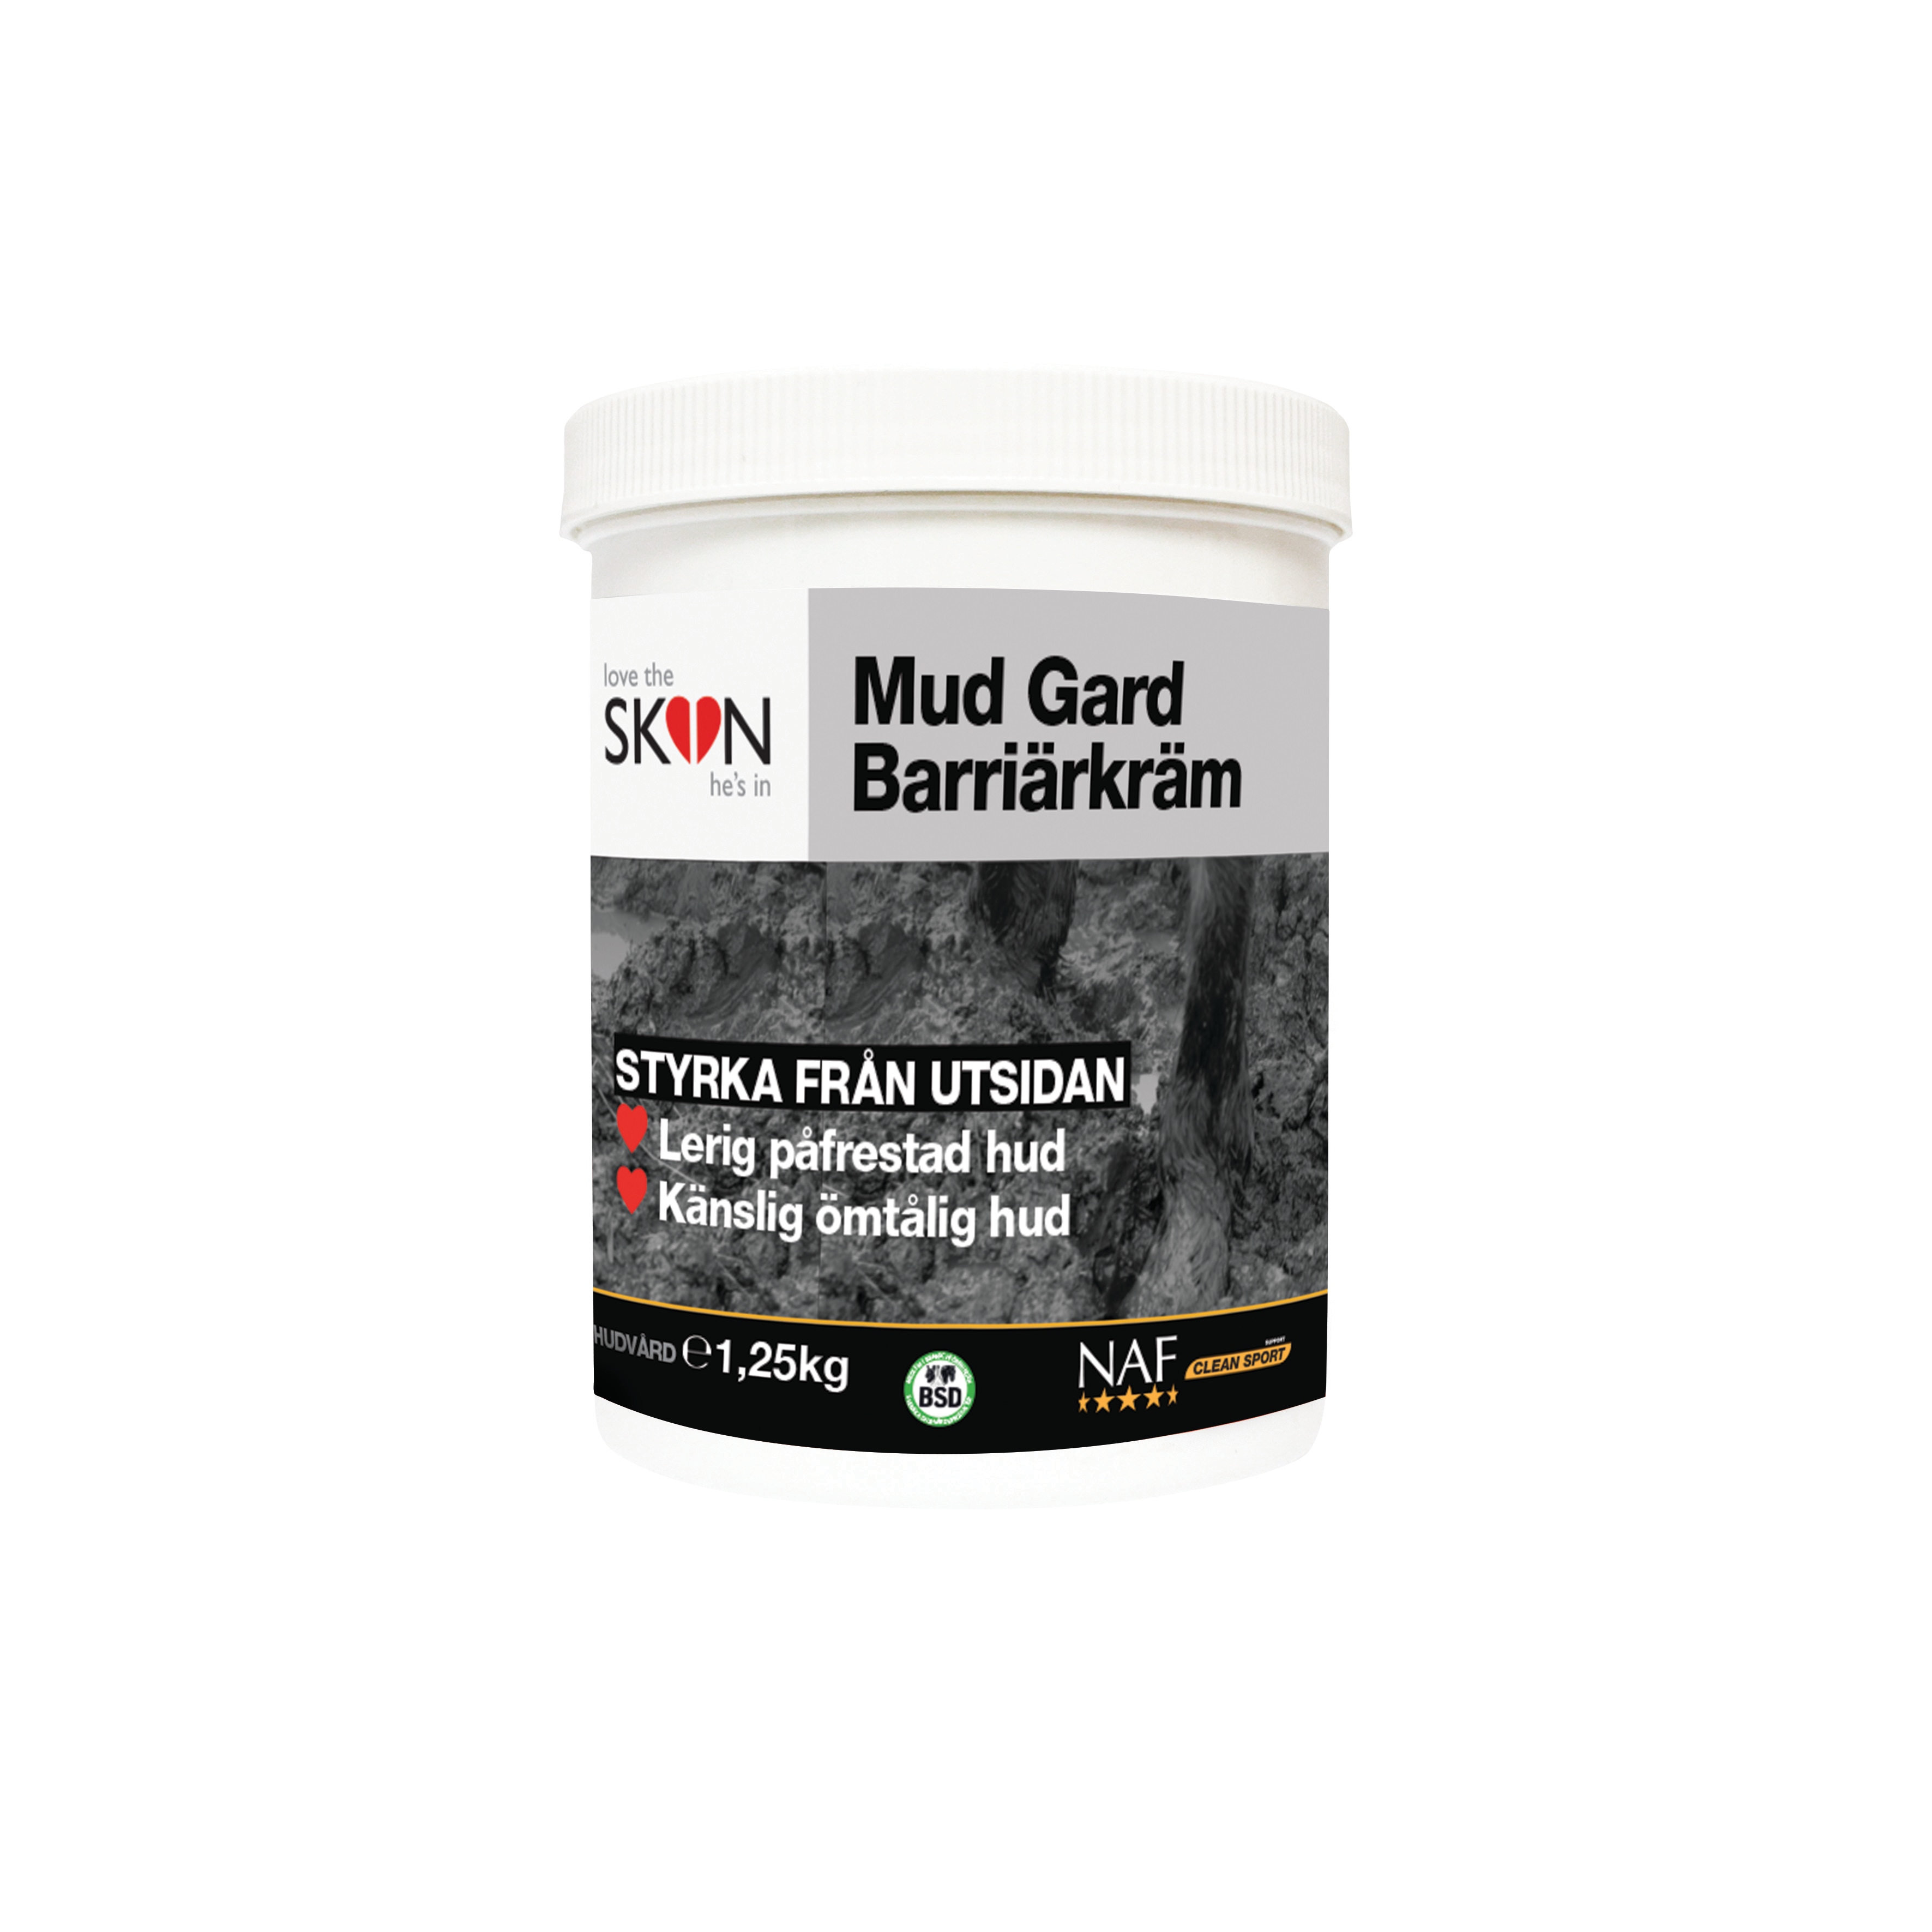 Mud Guard Ointment